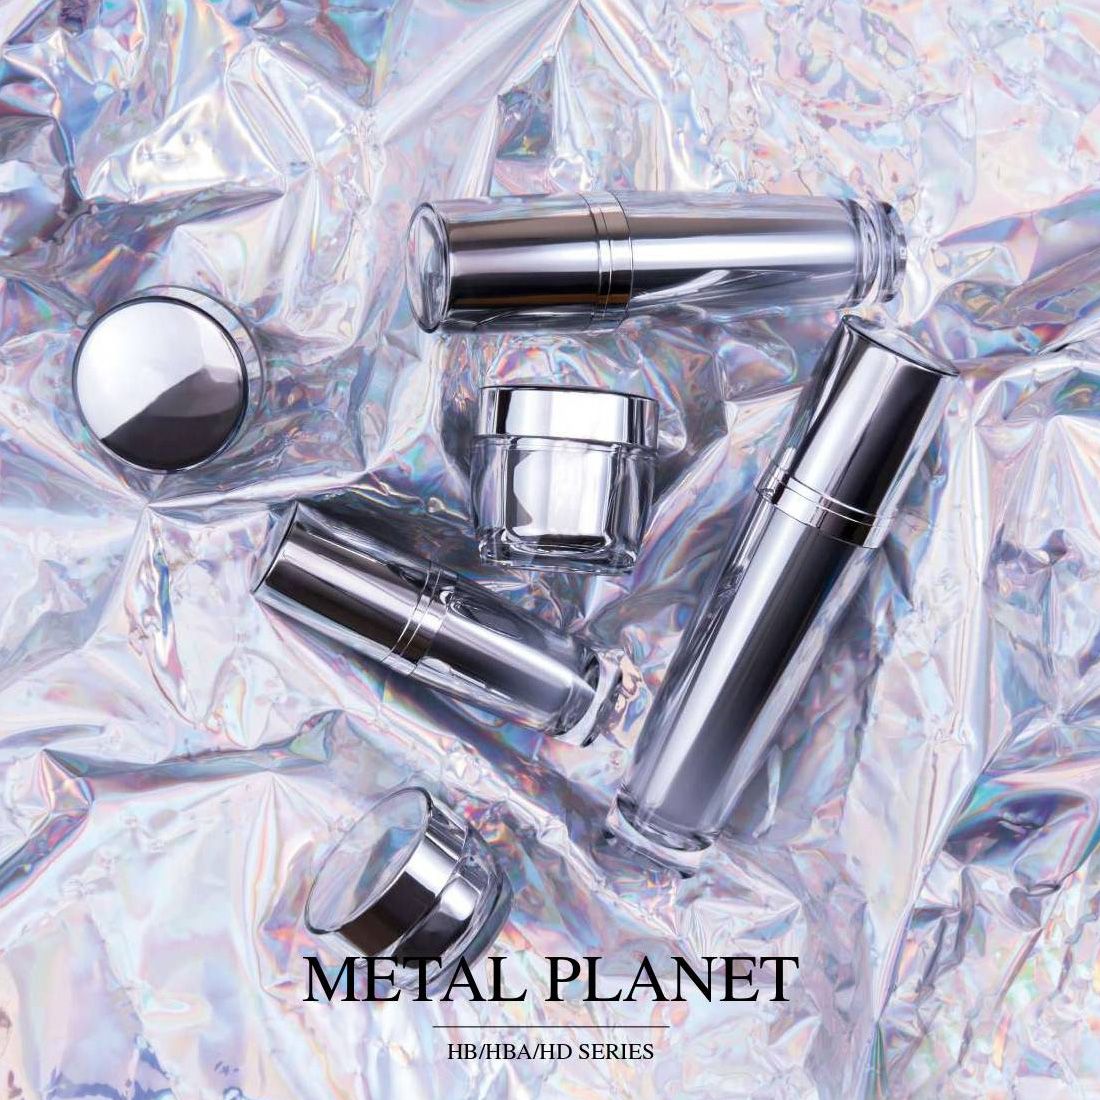 Metal Planet (Acrylic Luxury Cosmetic & Skincare Packaging) HB / HBA / HD Series